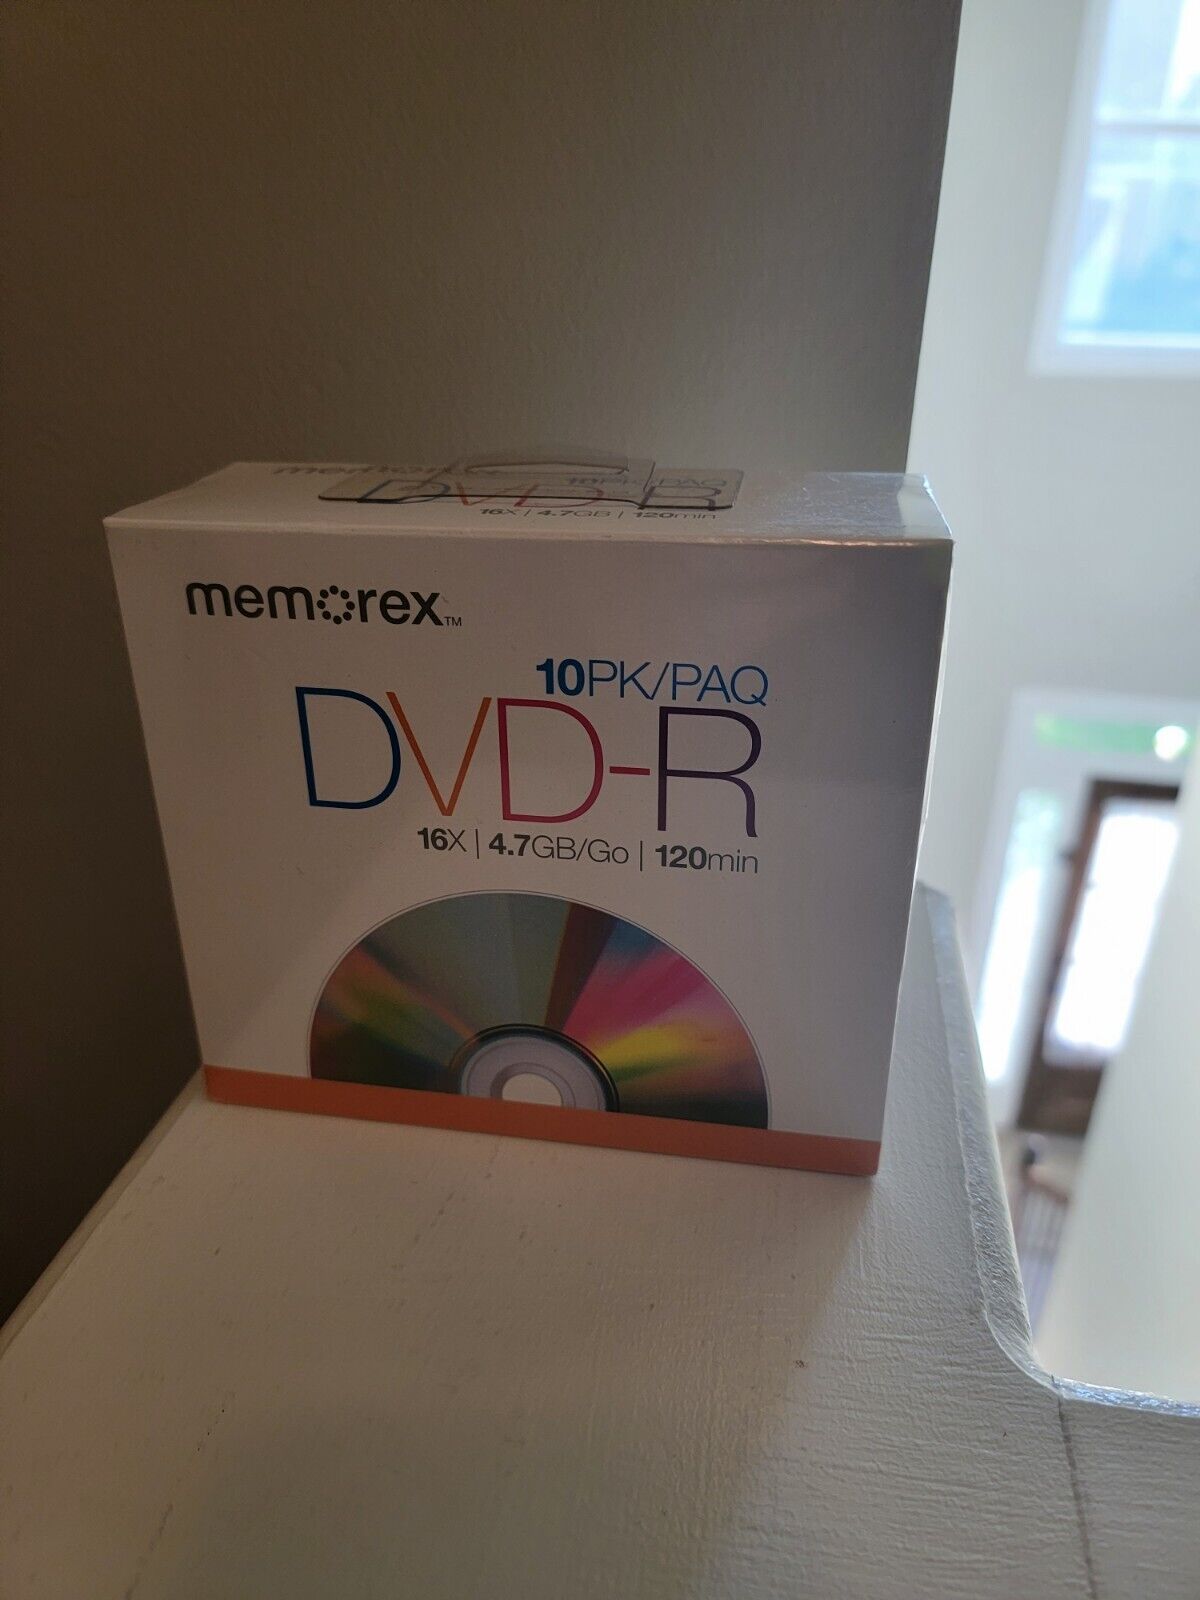 MEMOREX DVD-R 10PK/ PAQ 16X 4.7 GB/Go 120 Min ,Jewel Cases NEW Factory Sealed